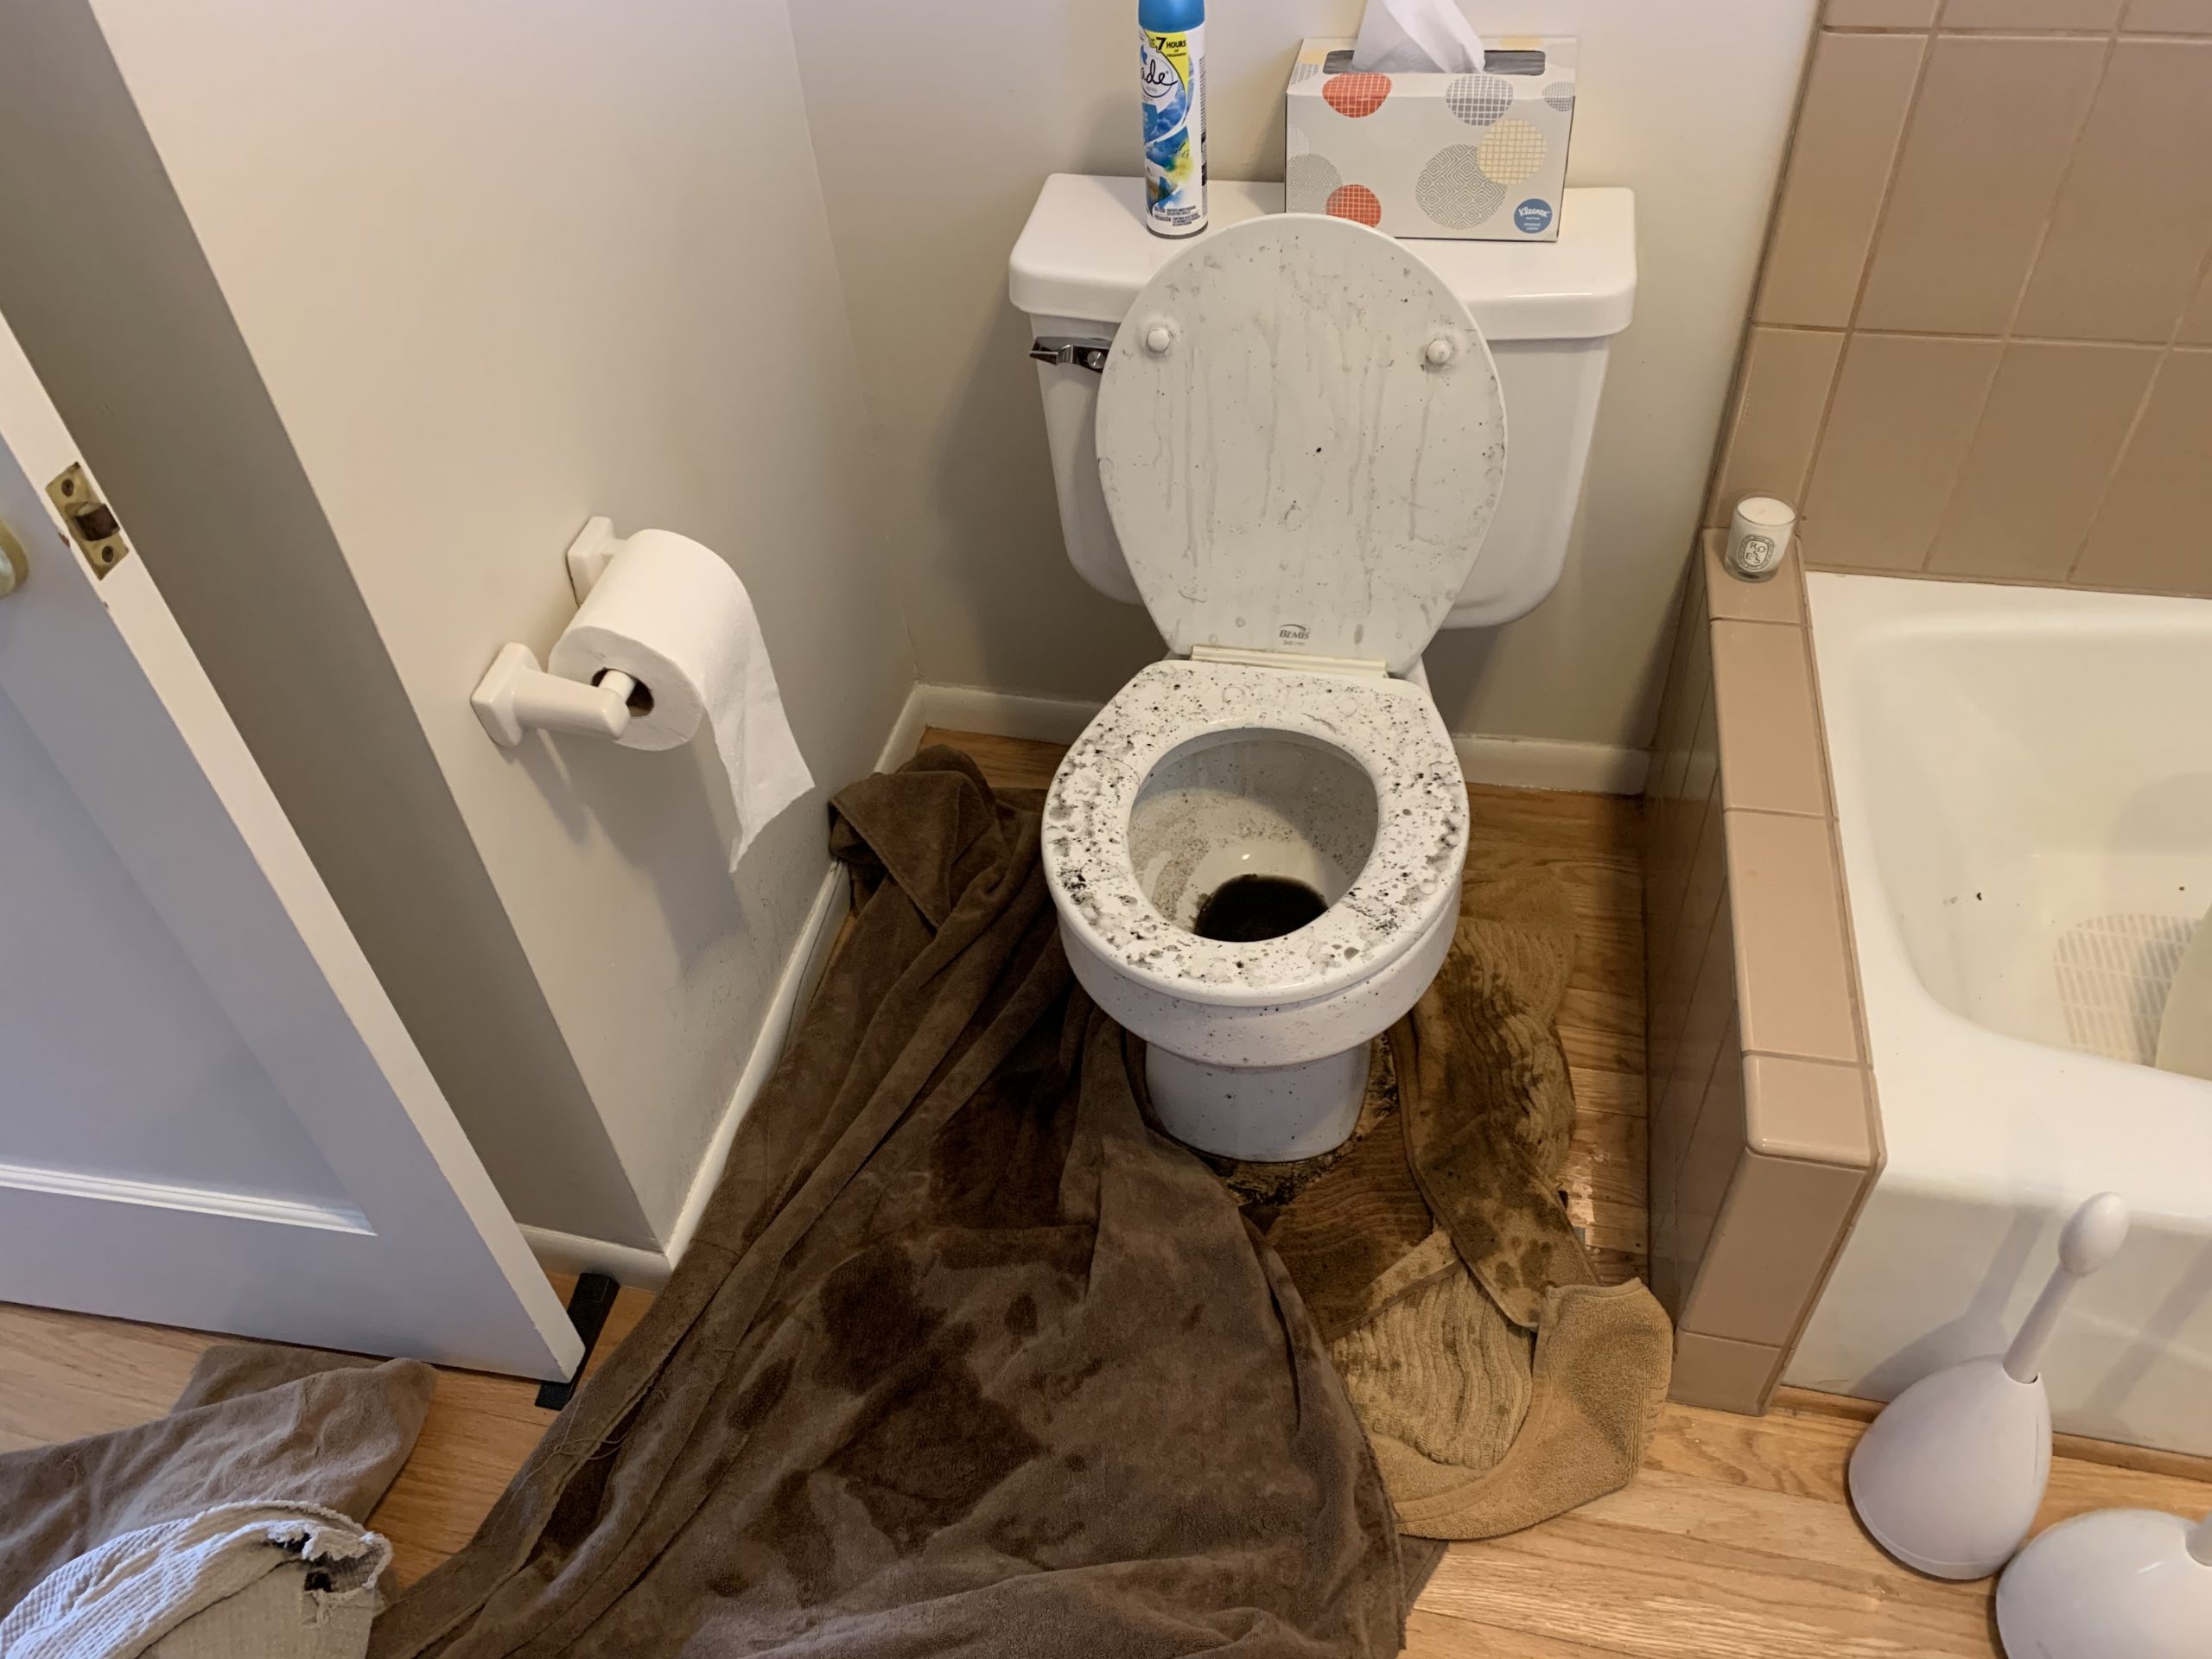 Dirty bathroom toilet